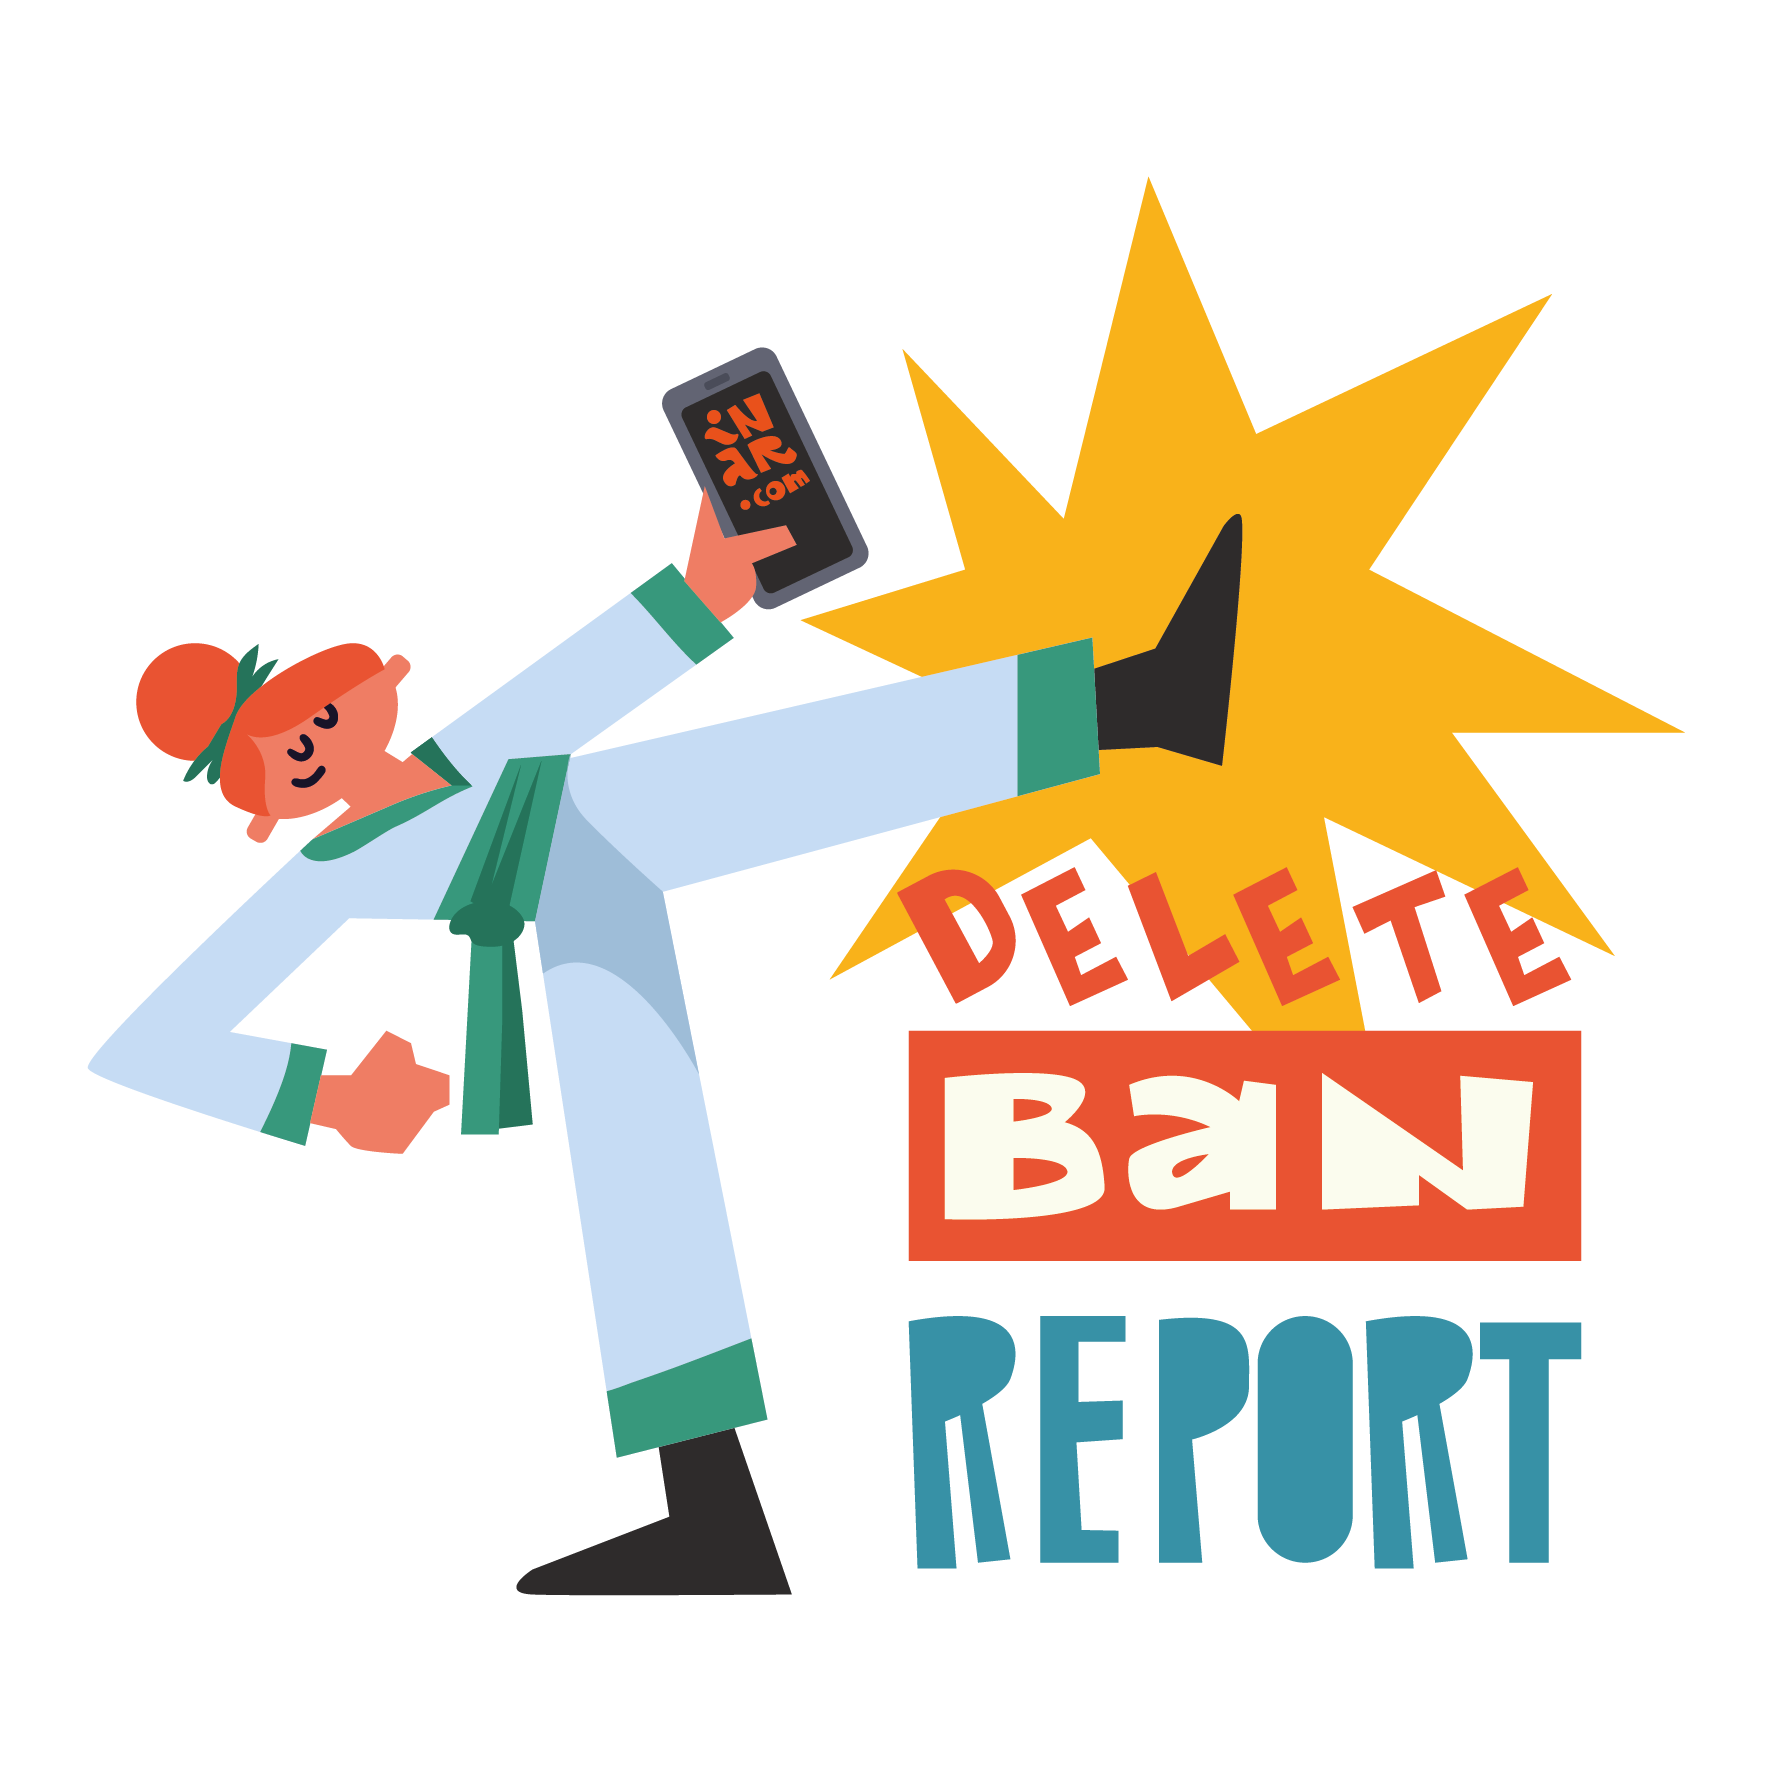 Delete Ban Report illustration by Ashwin Chacko